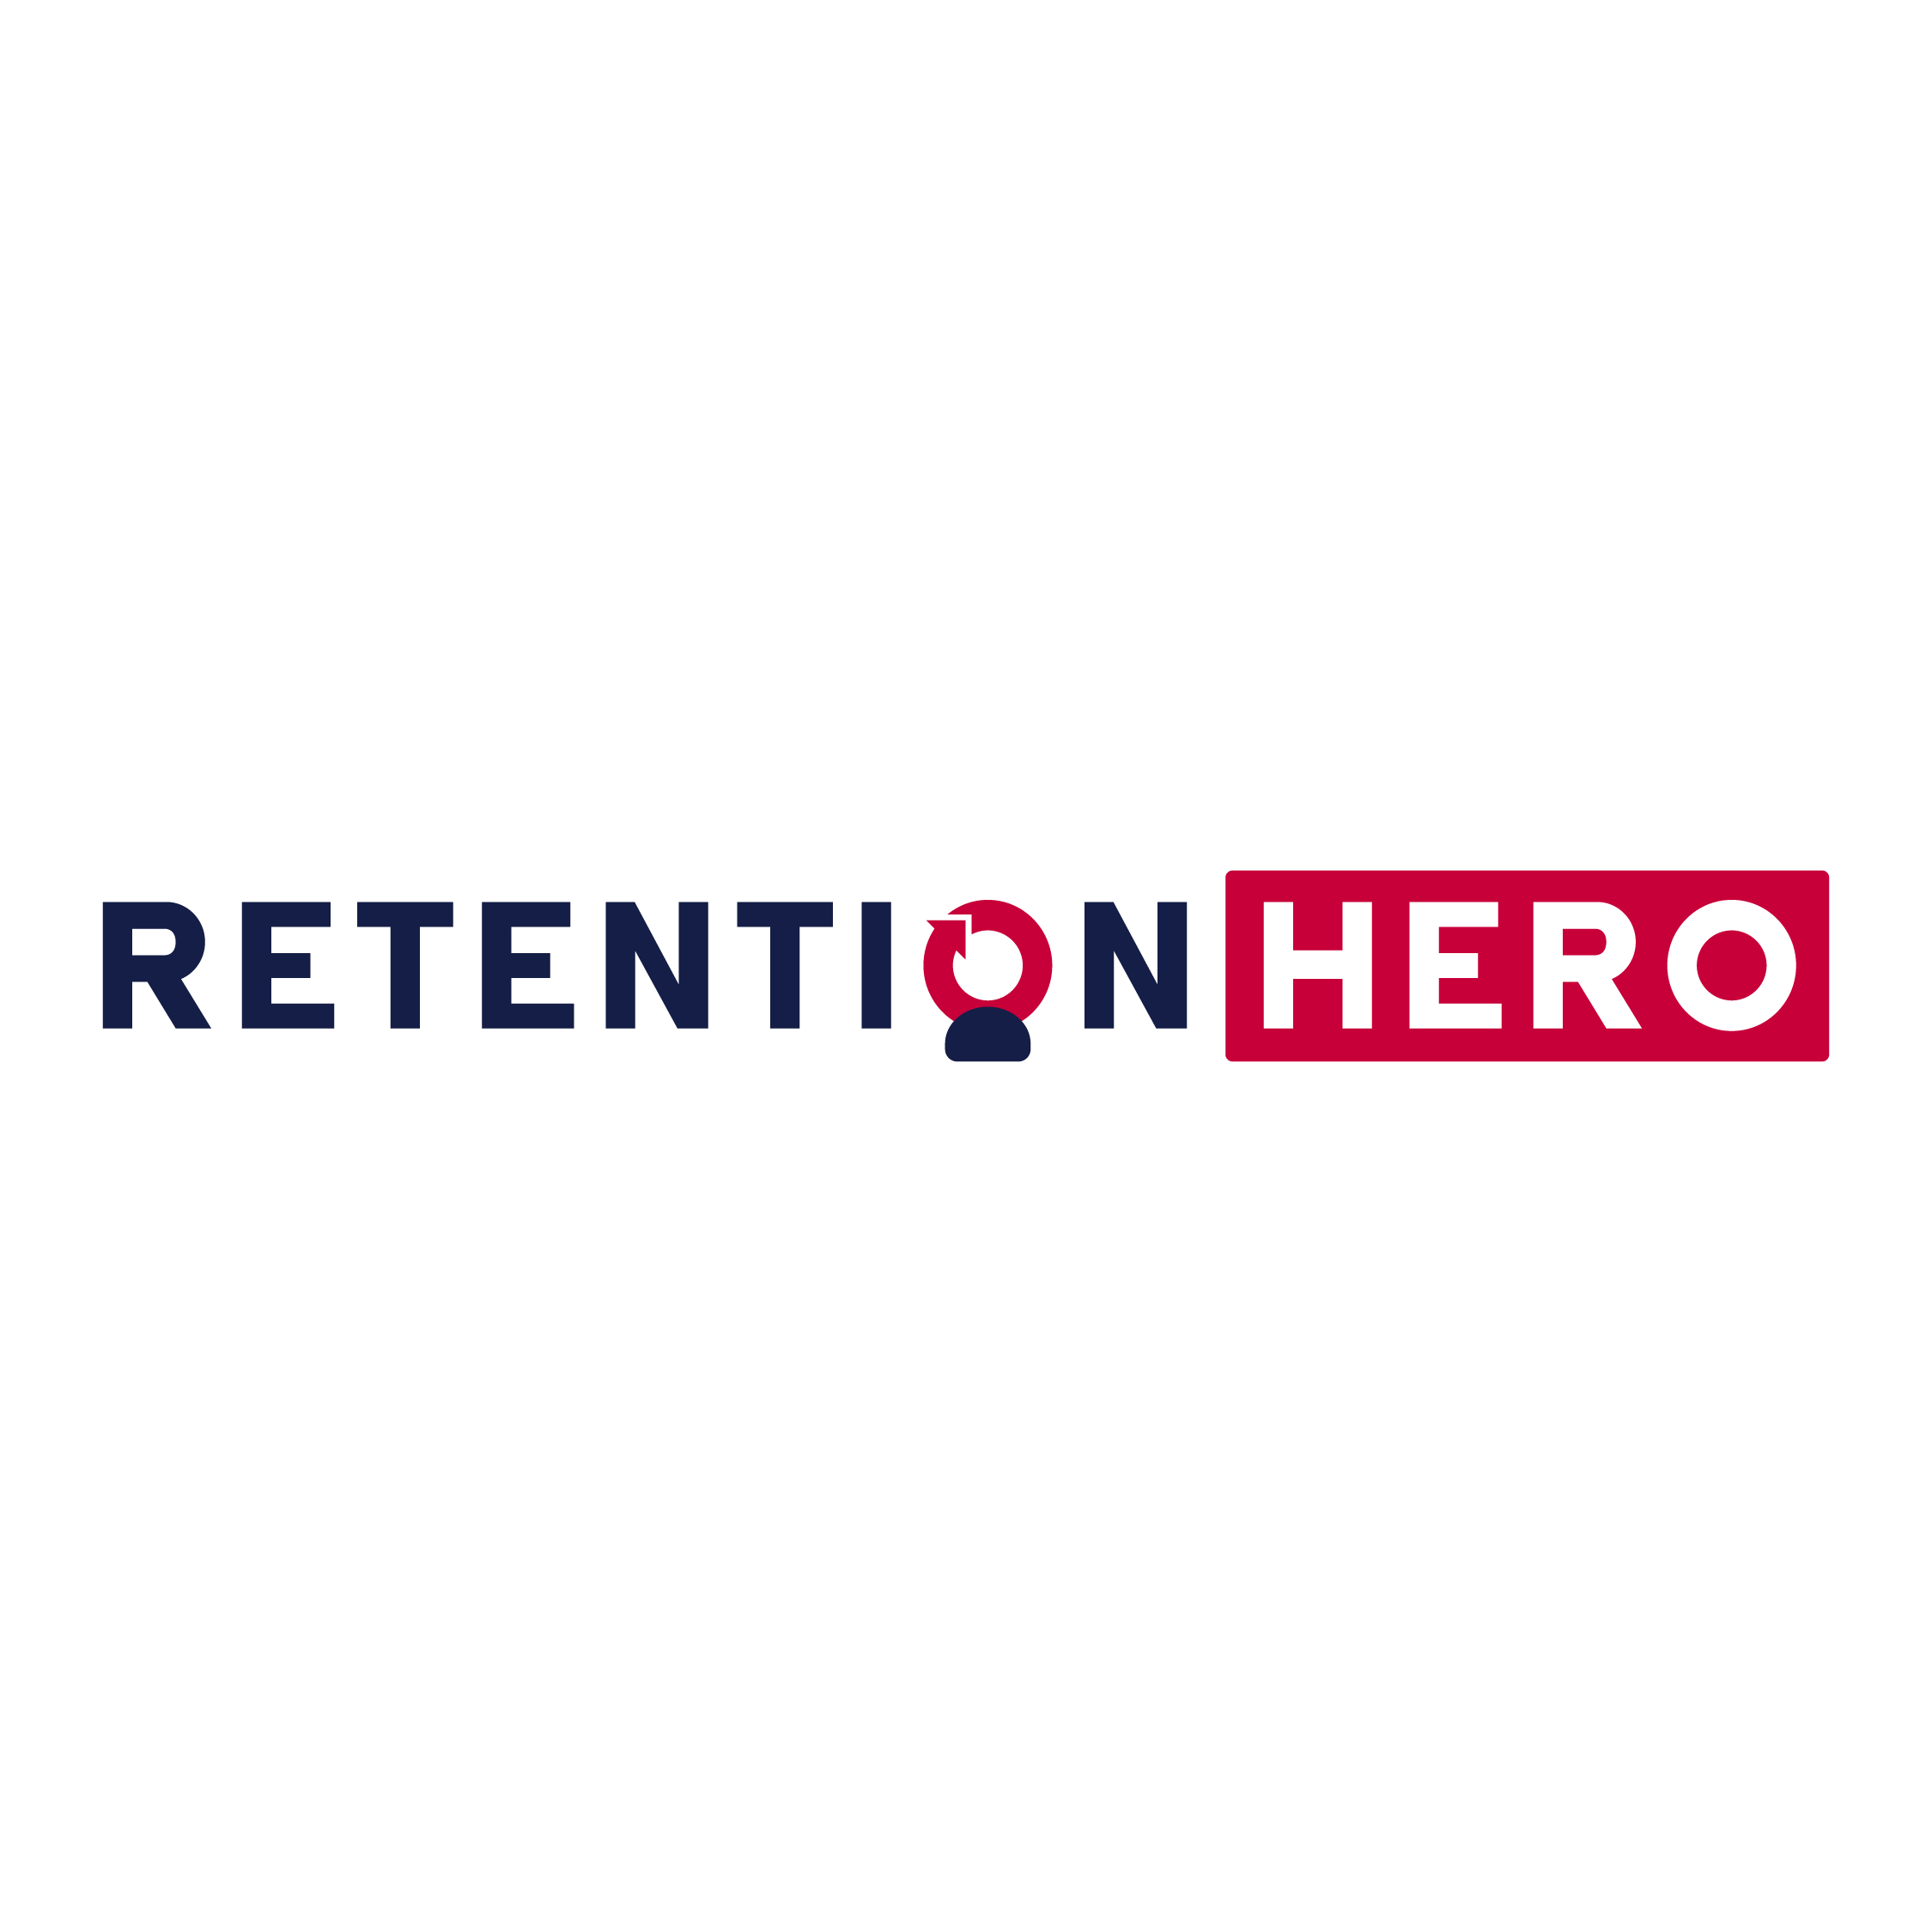 Retention Hero